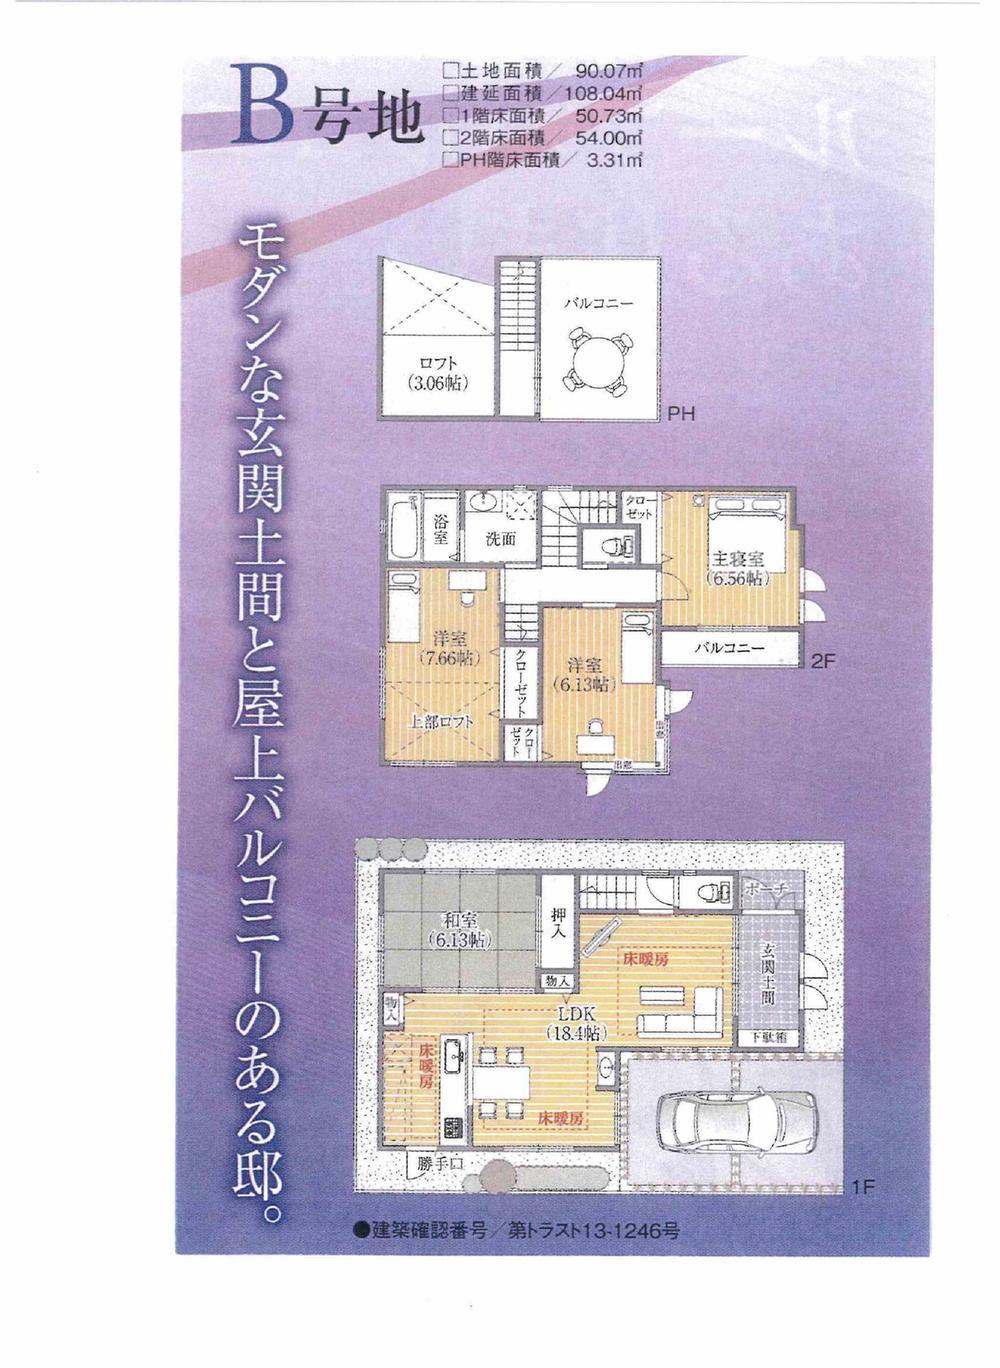 Floor plan. (B No. land), Price 41,980,000 yen, 4LDK, Land area 90.07 sq m , Building area 108.04 sq m